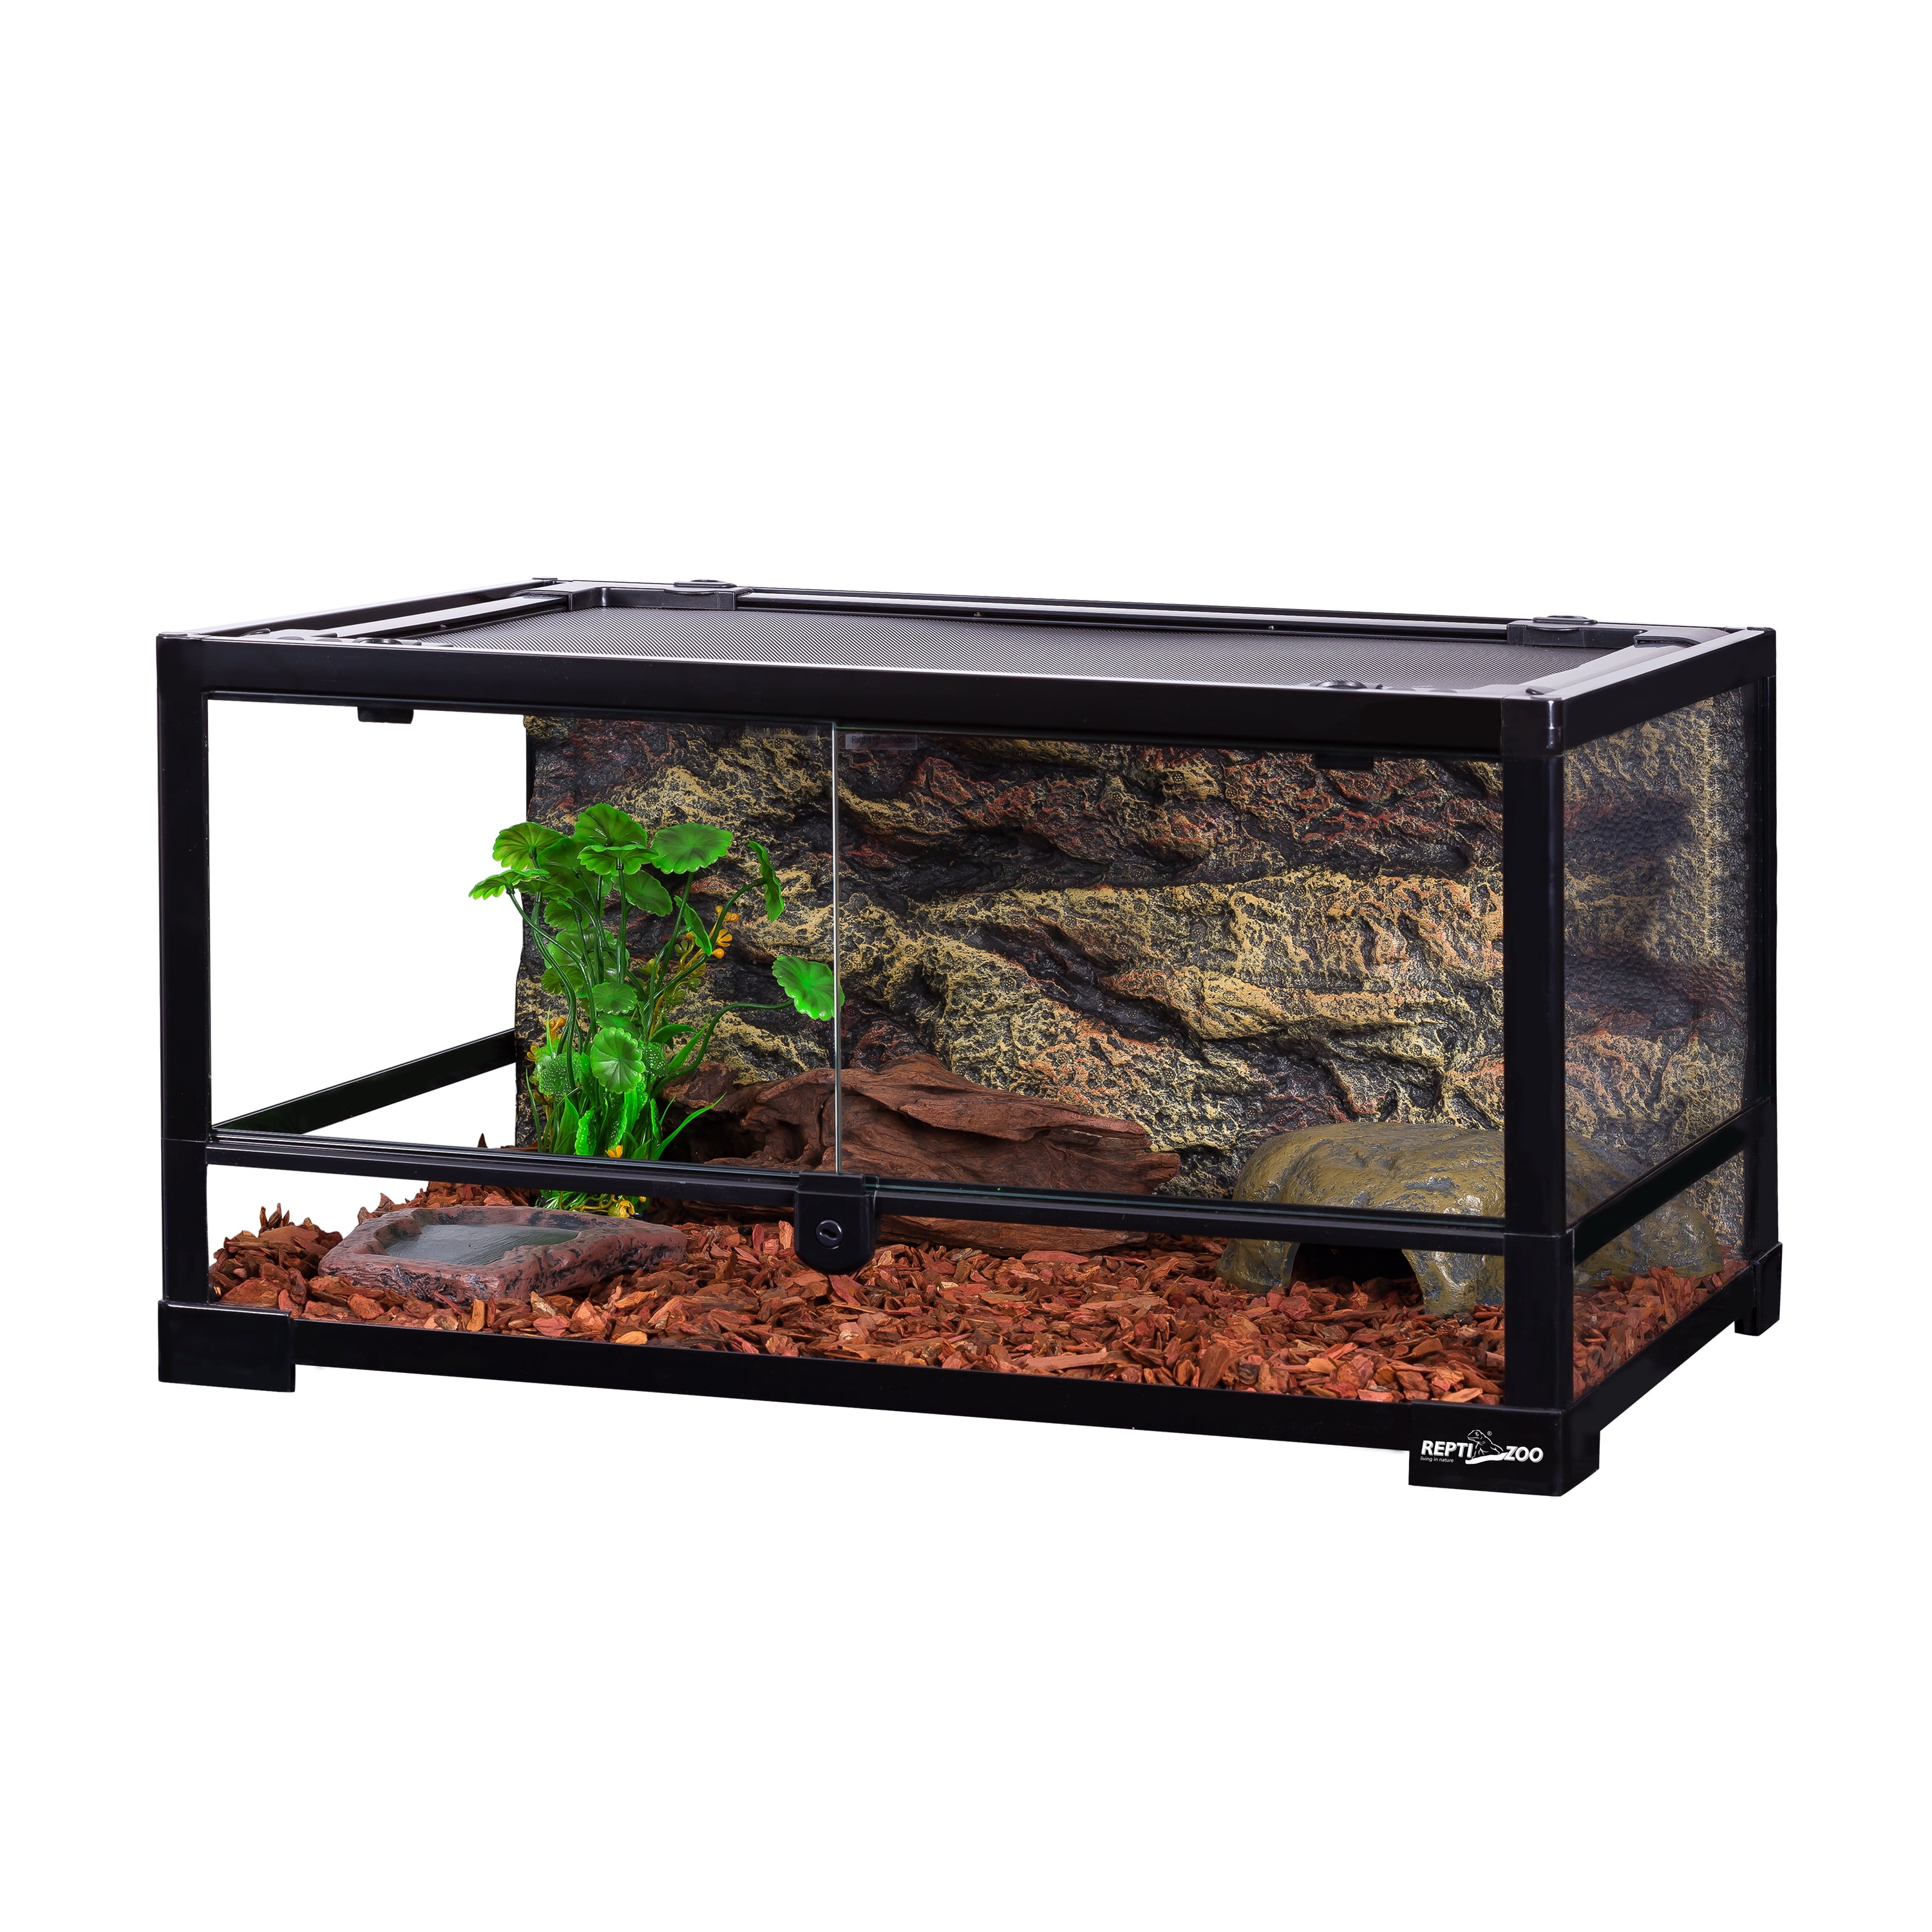 Buy REPTI ZOO 24 gallon Full Glass Reptile Terrarium Online at Lowest ...